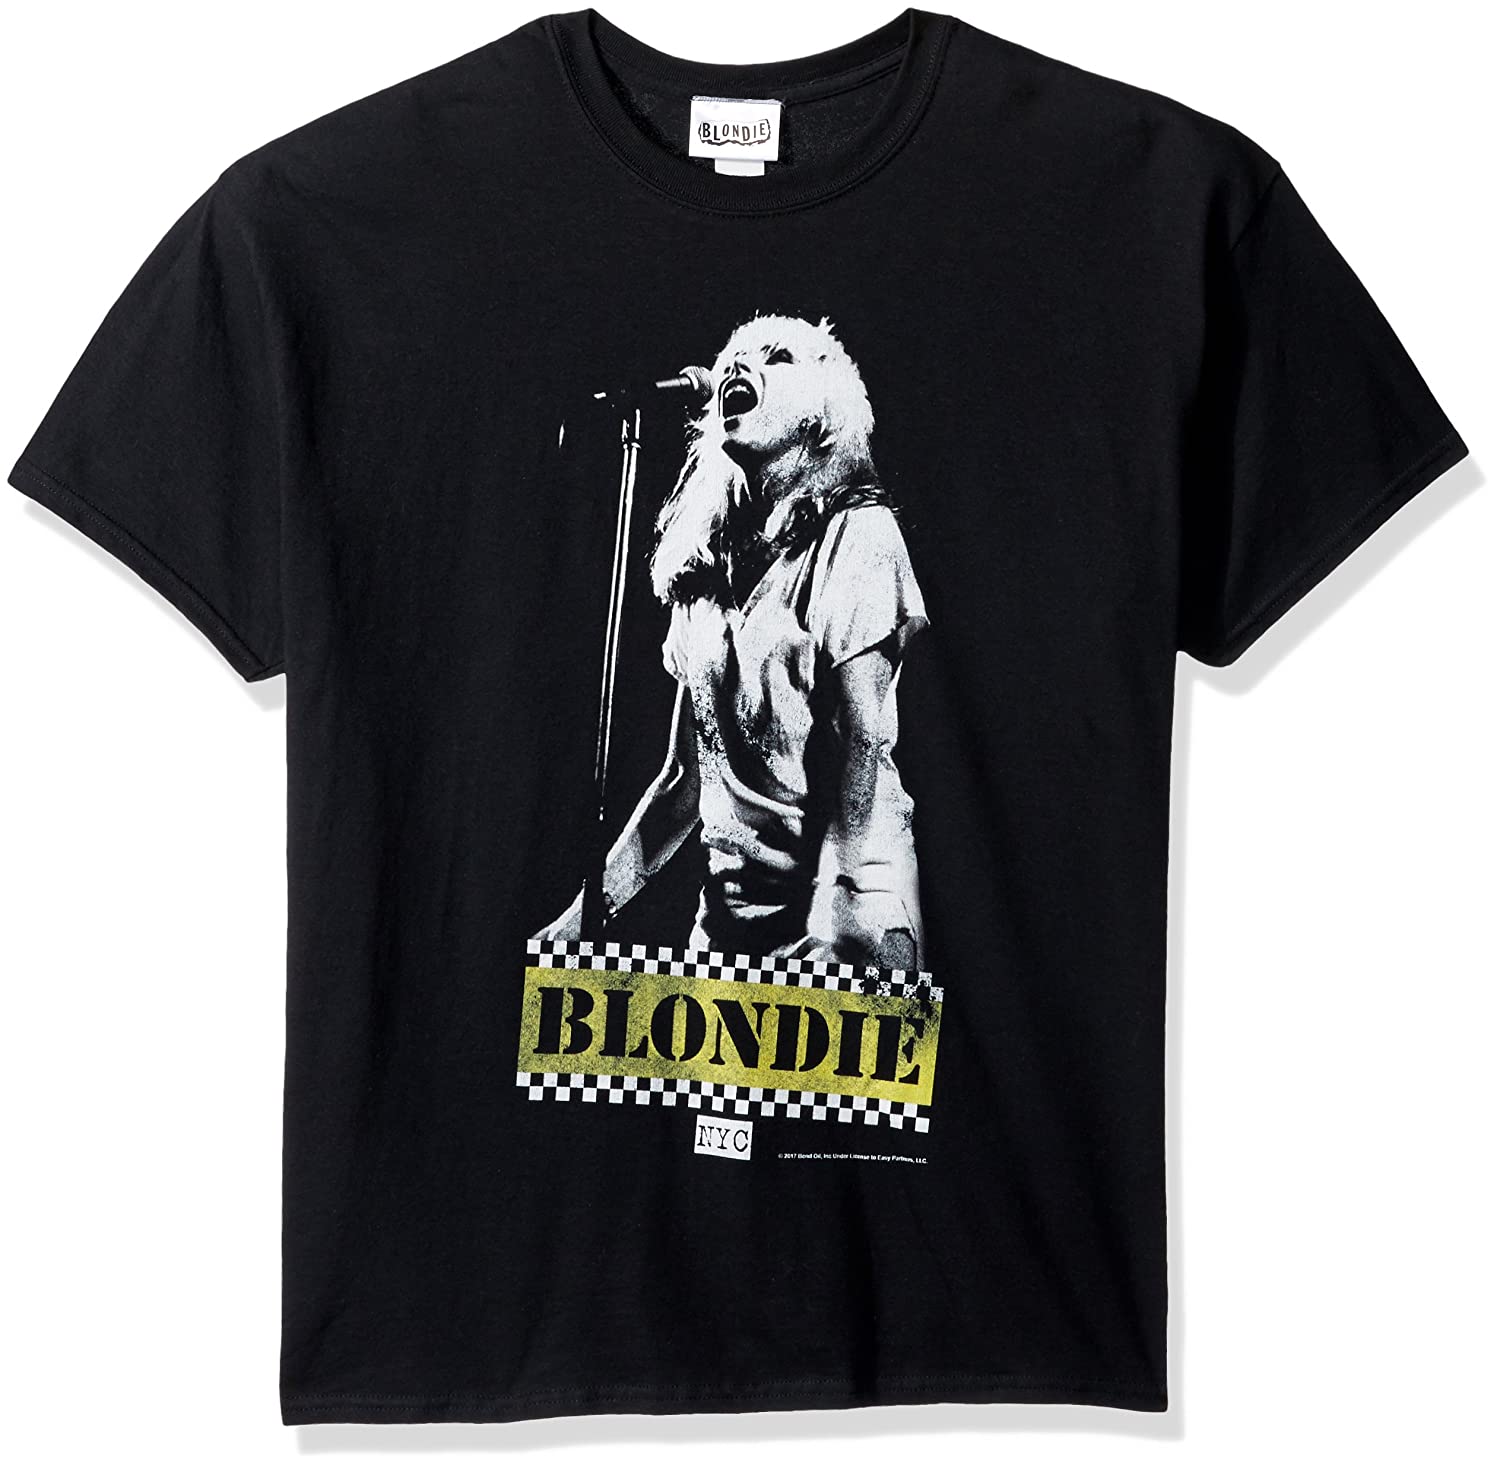 band t shirts - Blondie Men's Profile T-Shirt